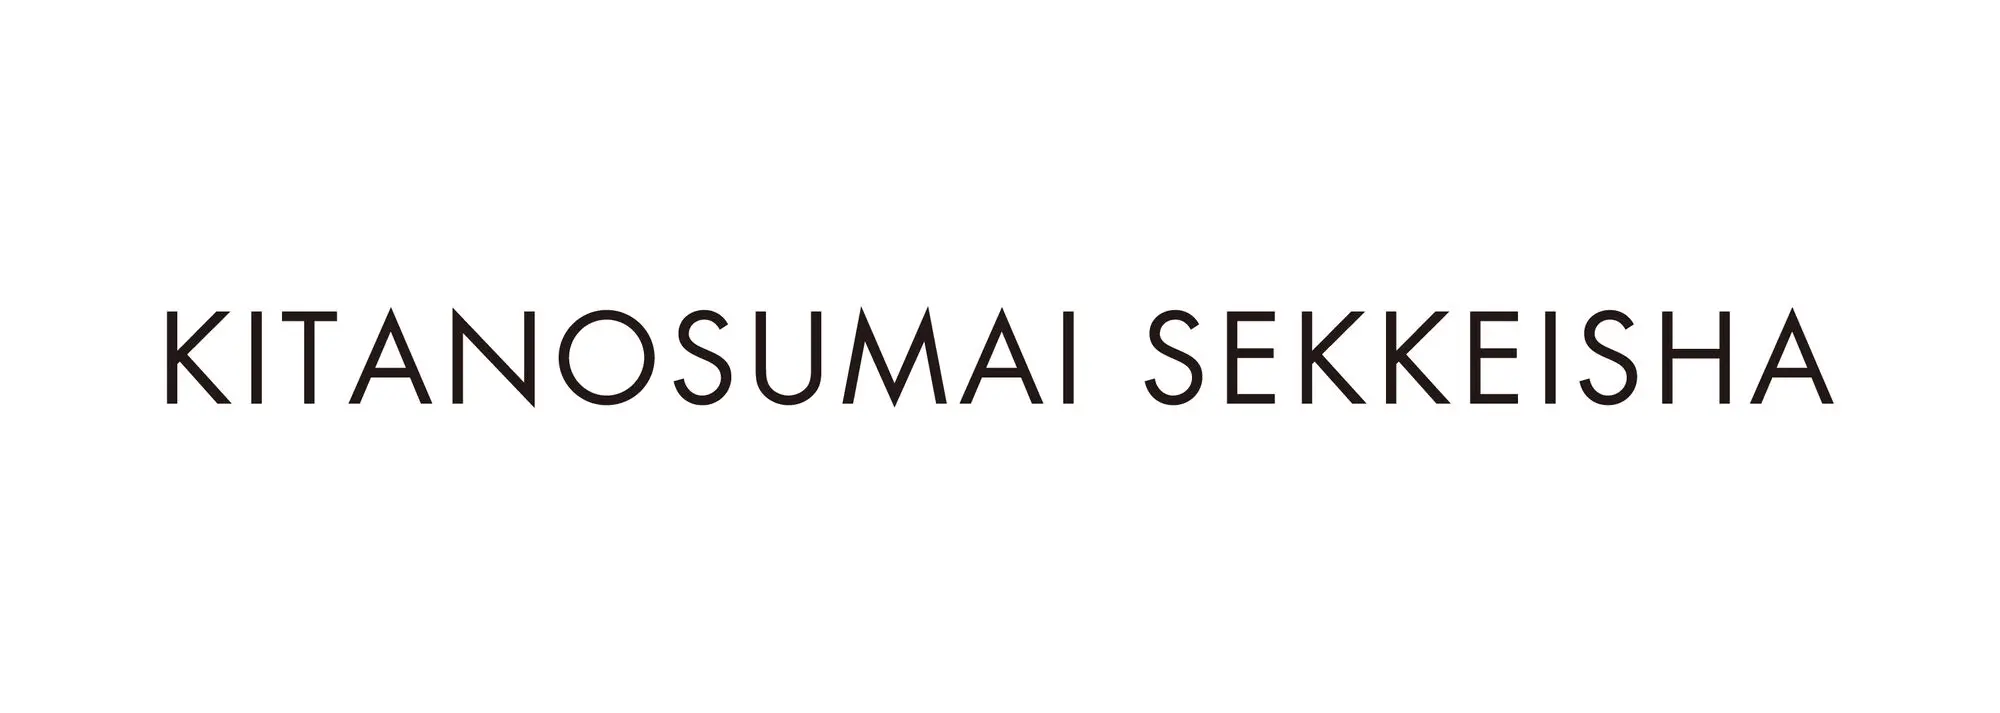 KITANOSUMAI SEKKEISHA Logo